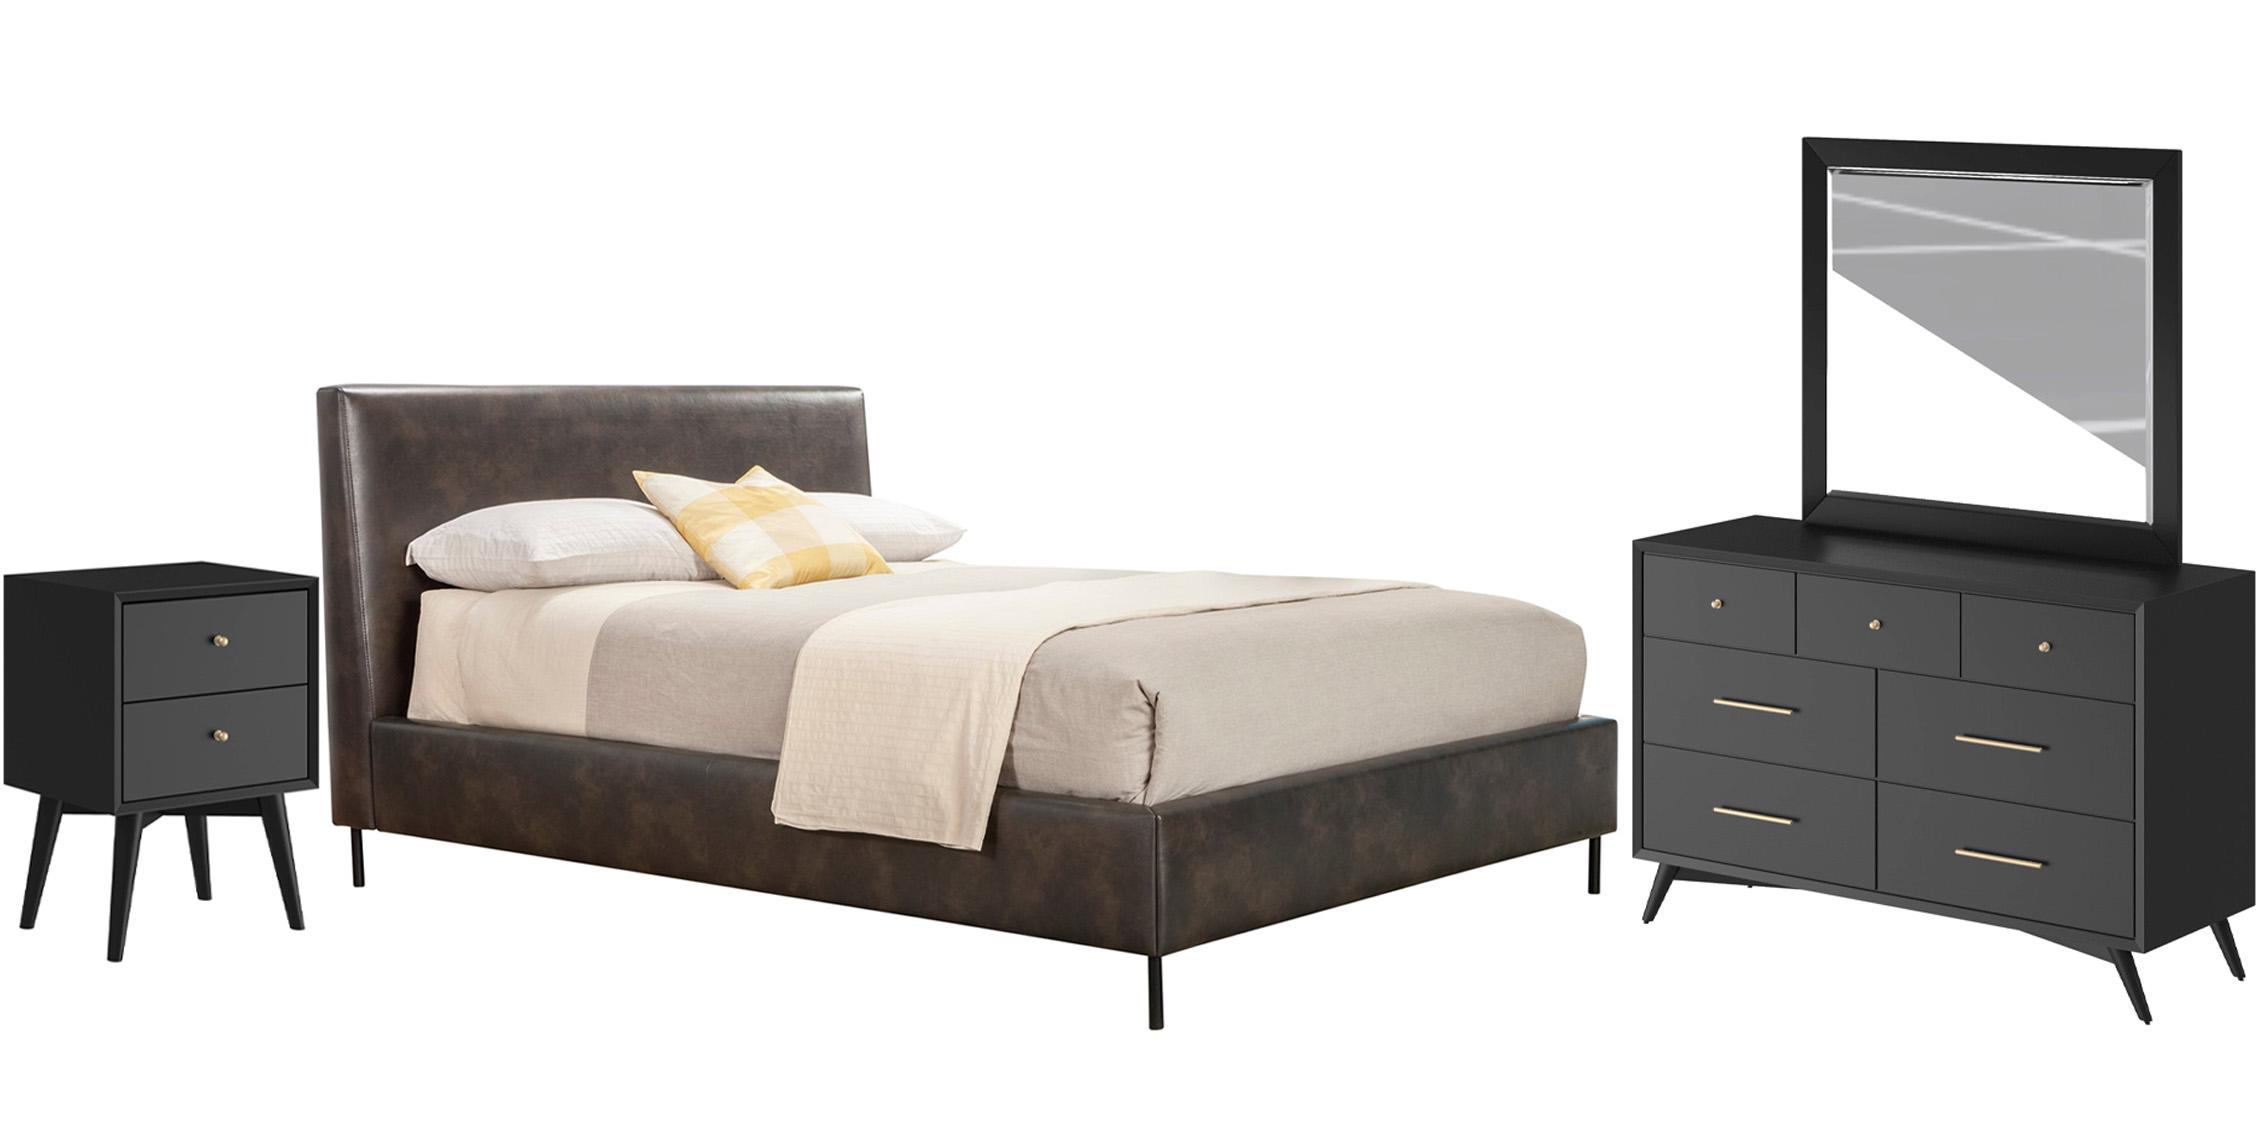 Modern Platform Bedroom Set SOPHIA / FLYNN 6902CK-GRY-Set-4-BLK in Gray, Black Faux Leather